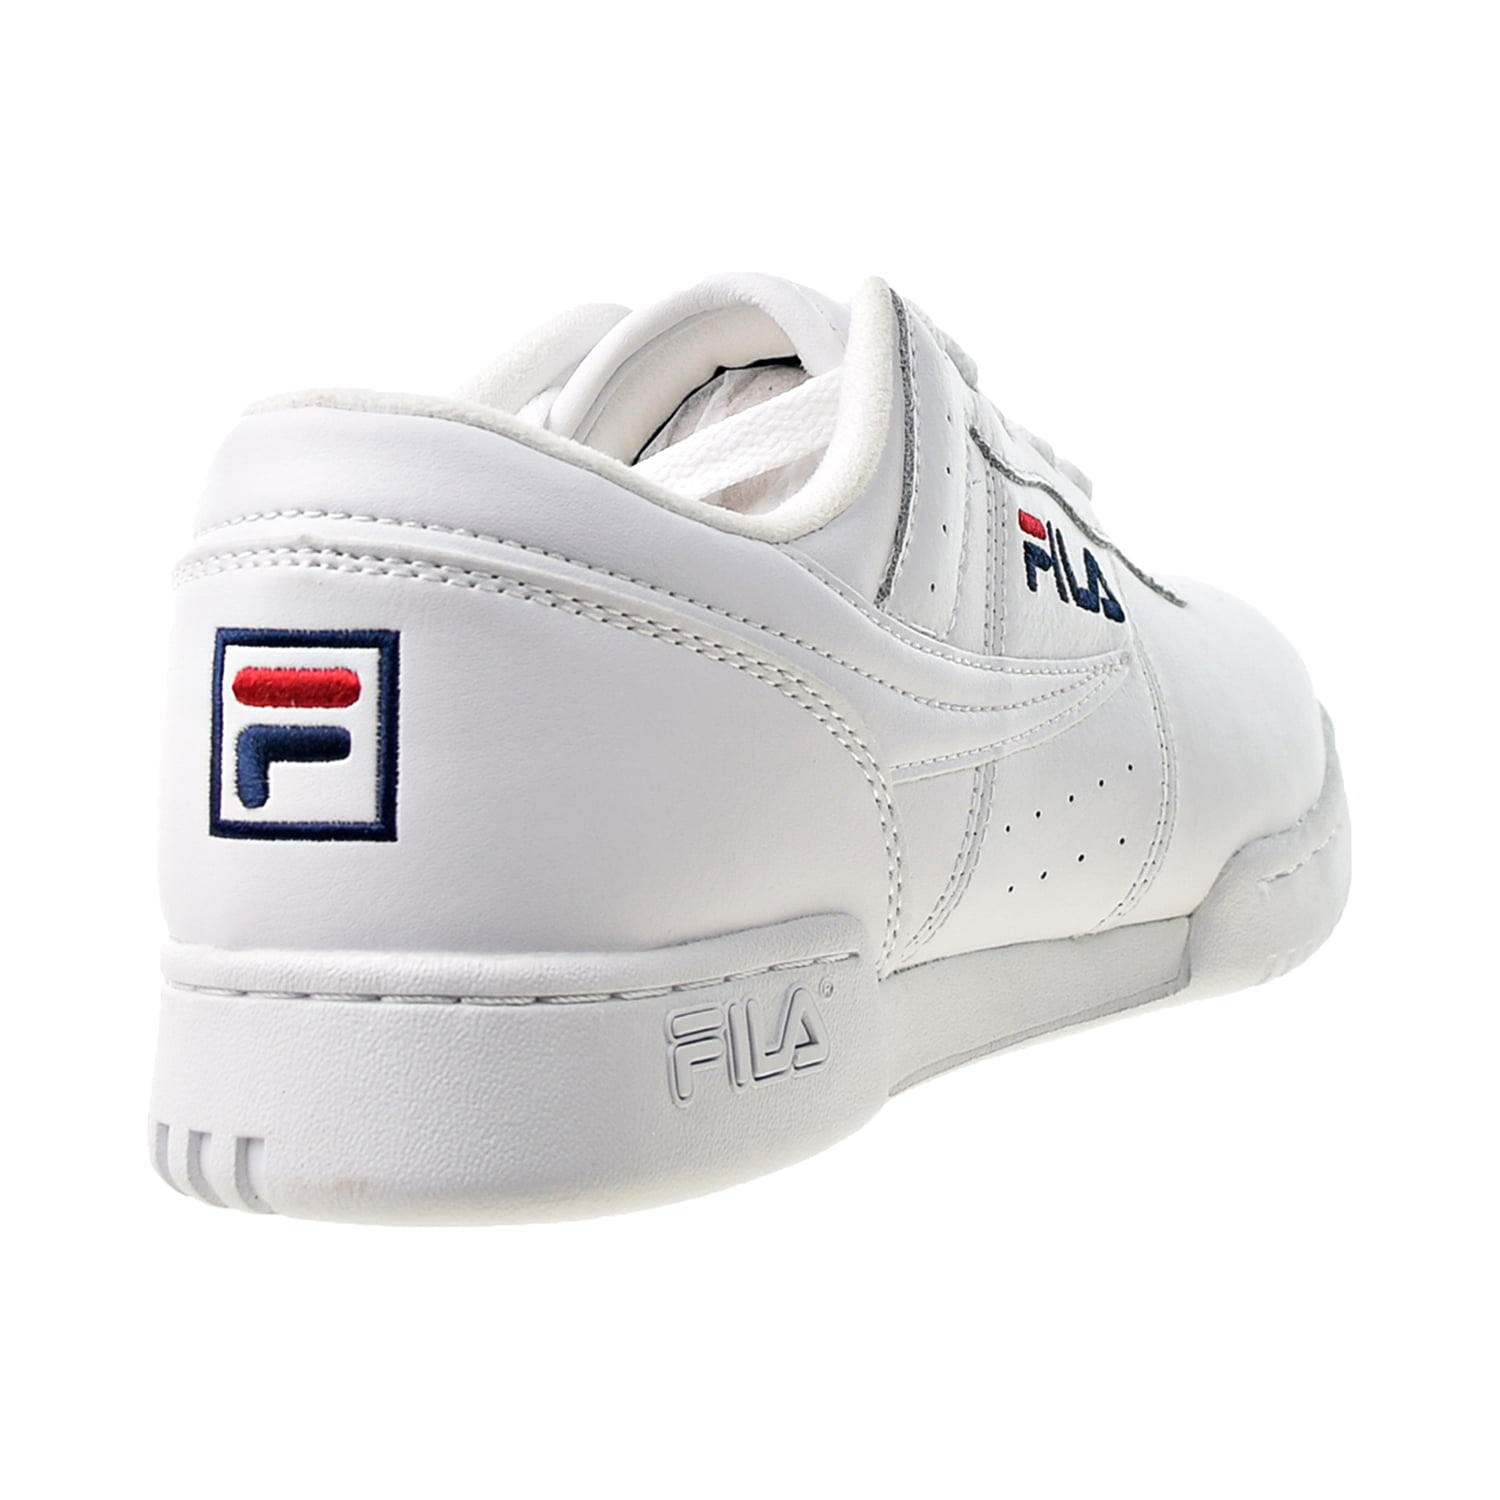 Fila Original Fitness Lea Classic Sneaker - - - - Walmart.com